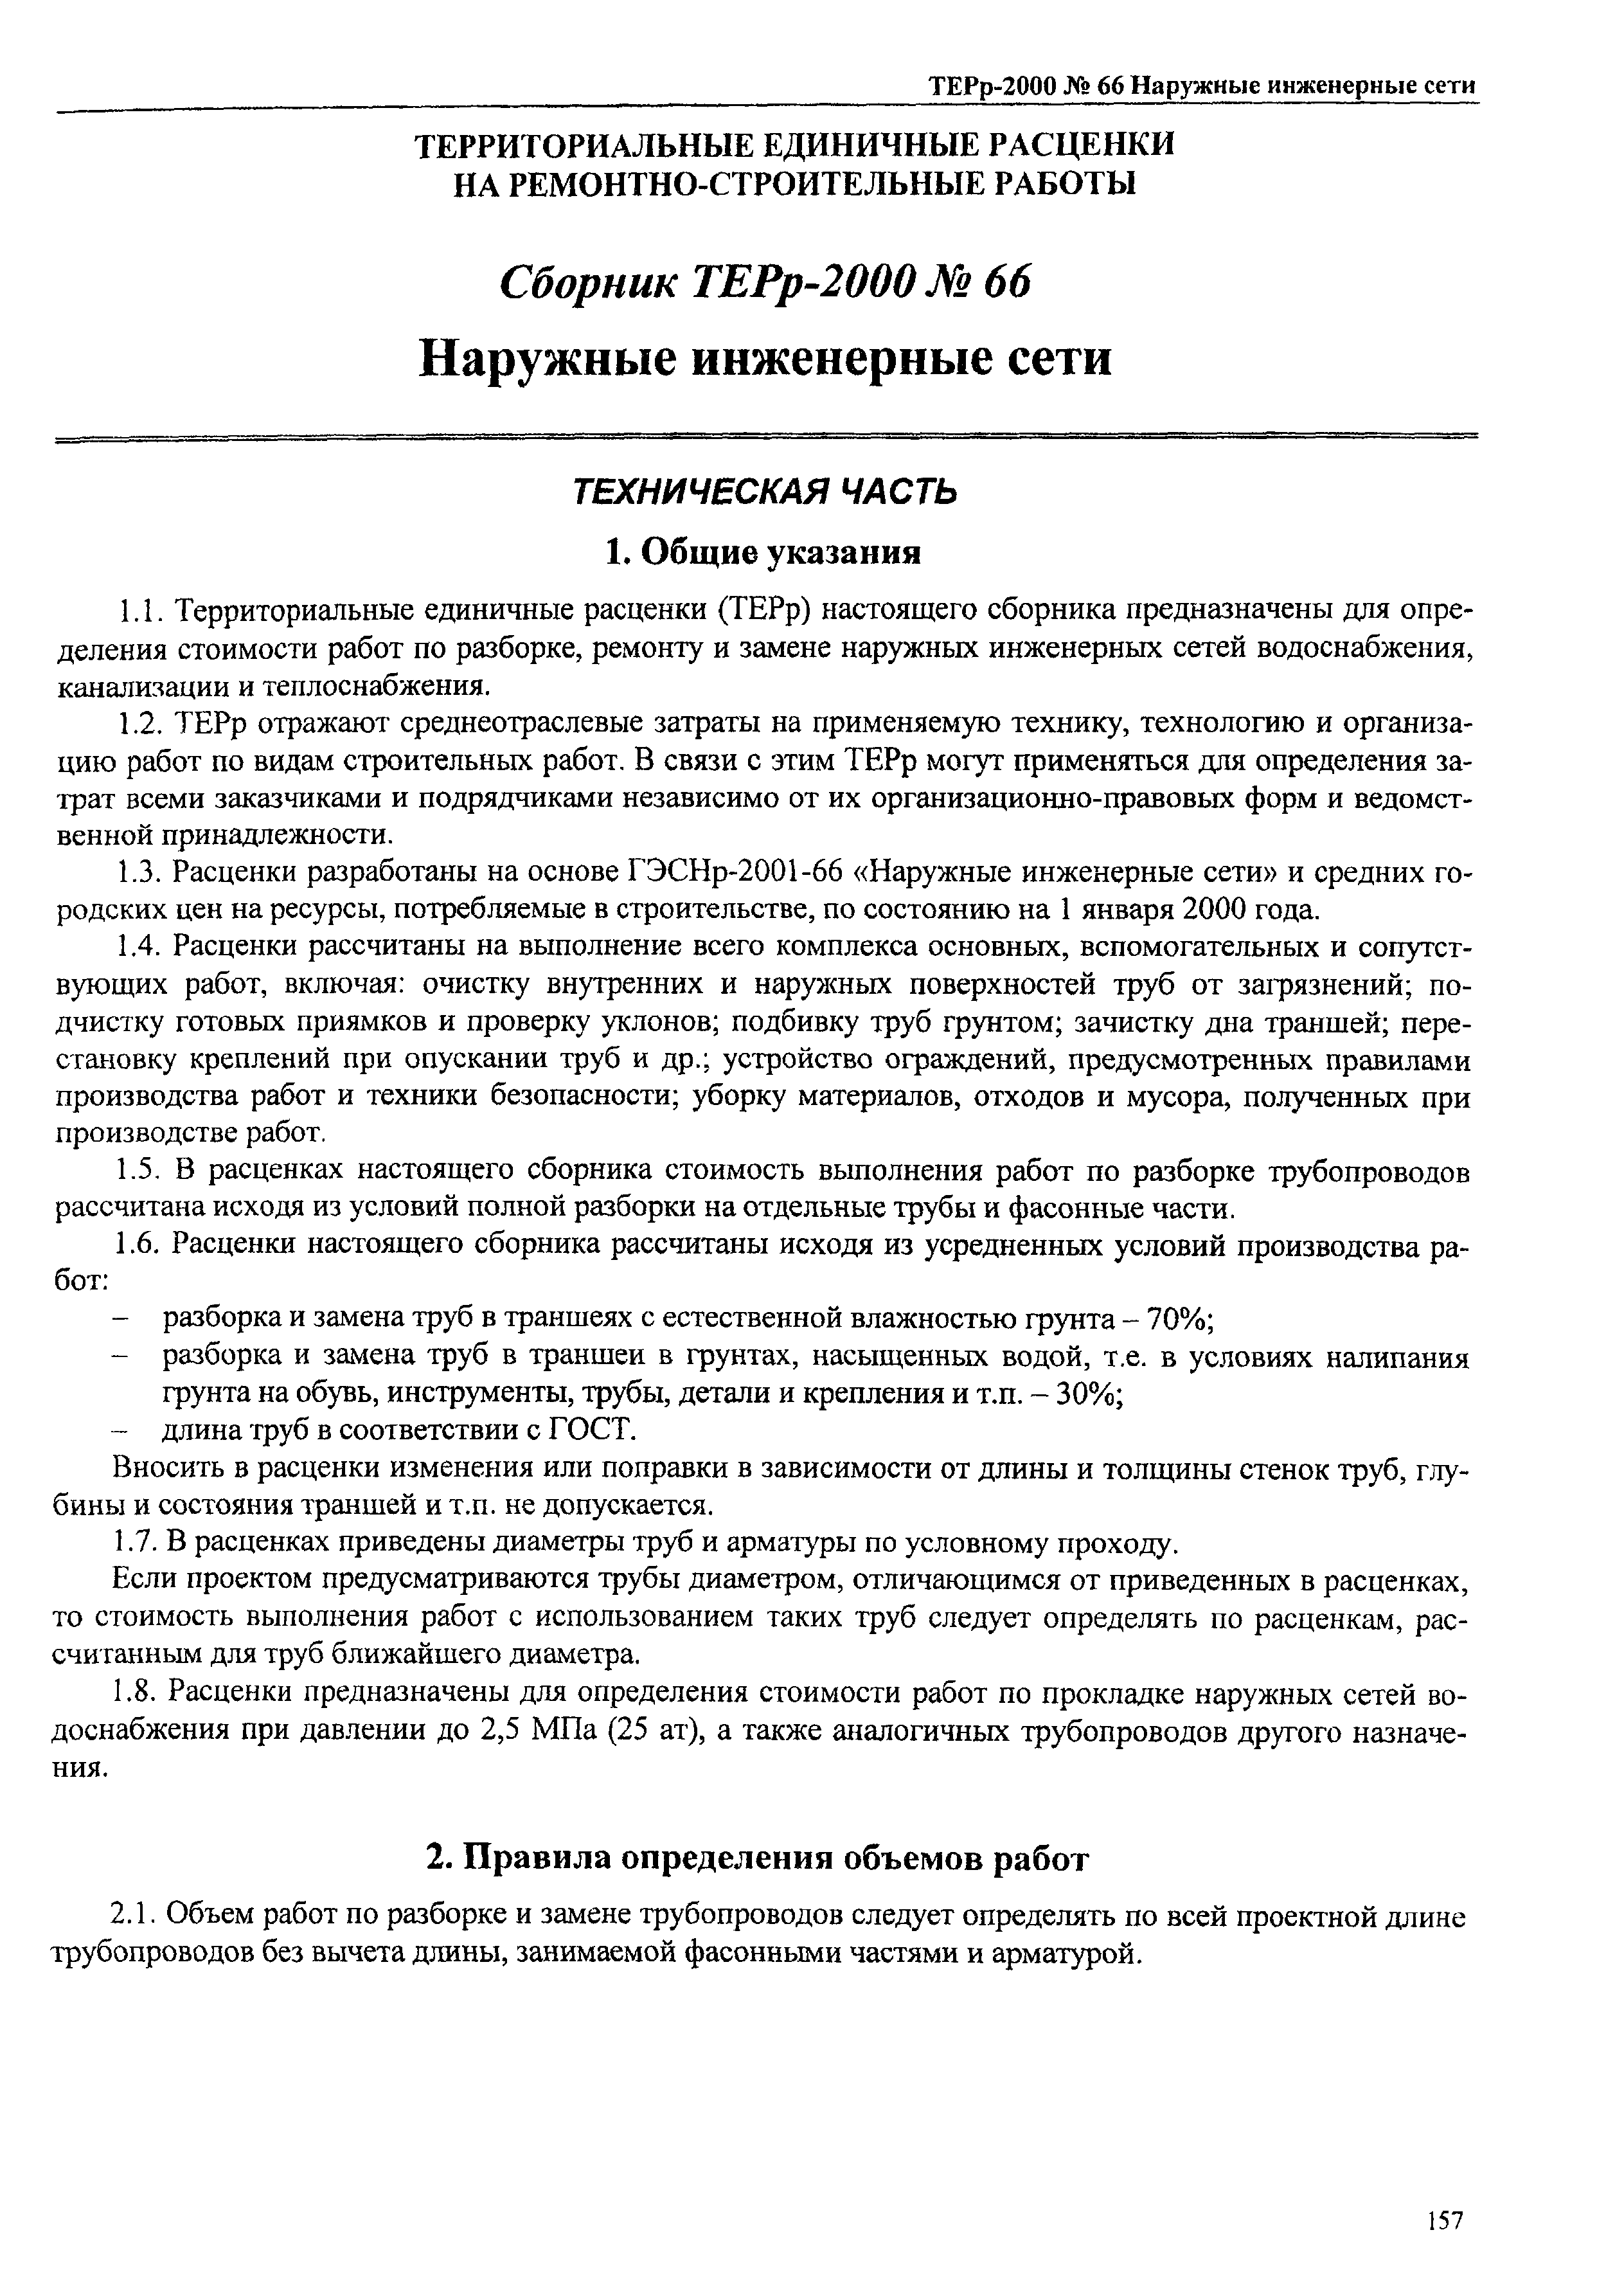 ТЕРр Омской области 2000